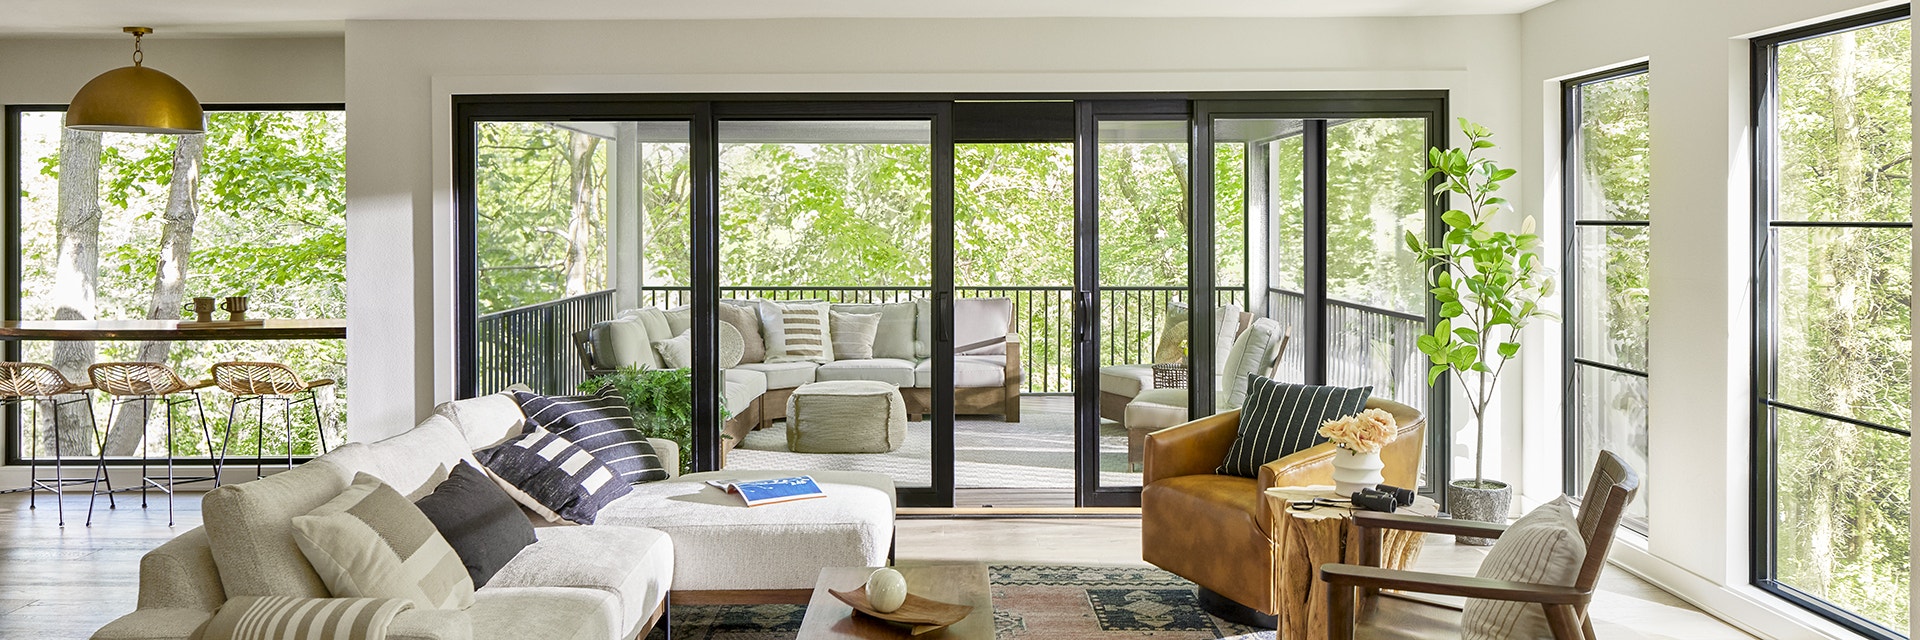 Floor To ceiling windows and patio doors open home to backyard/